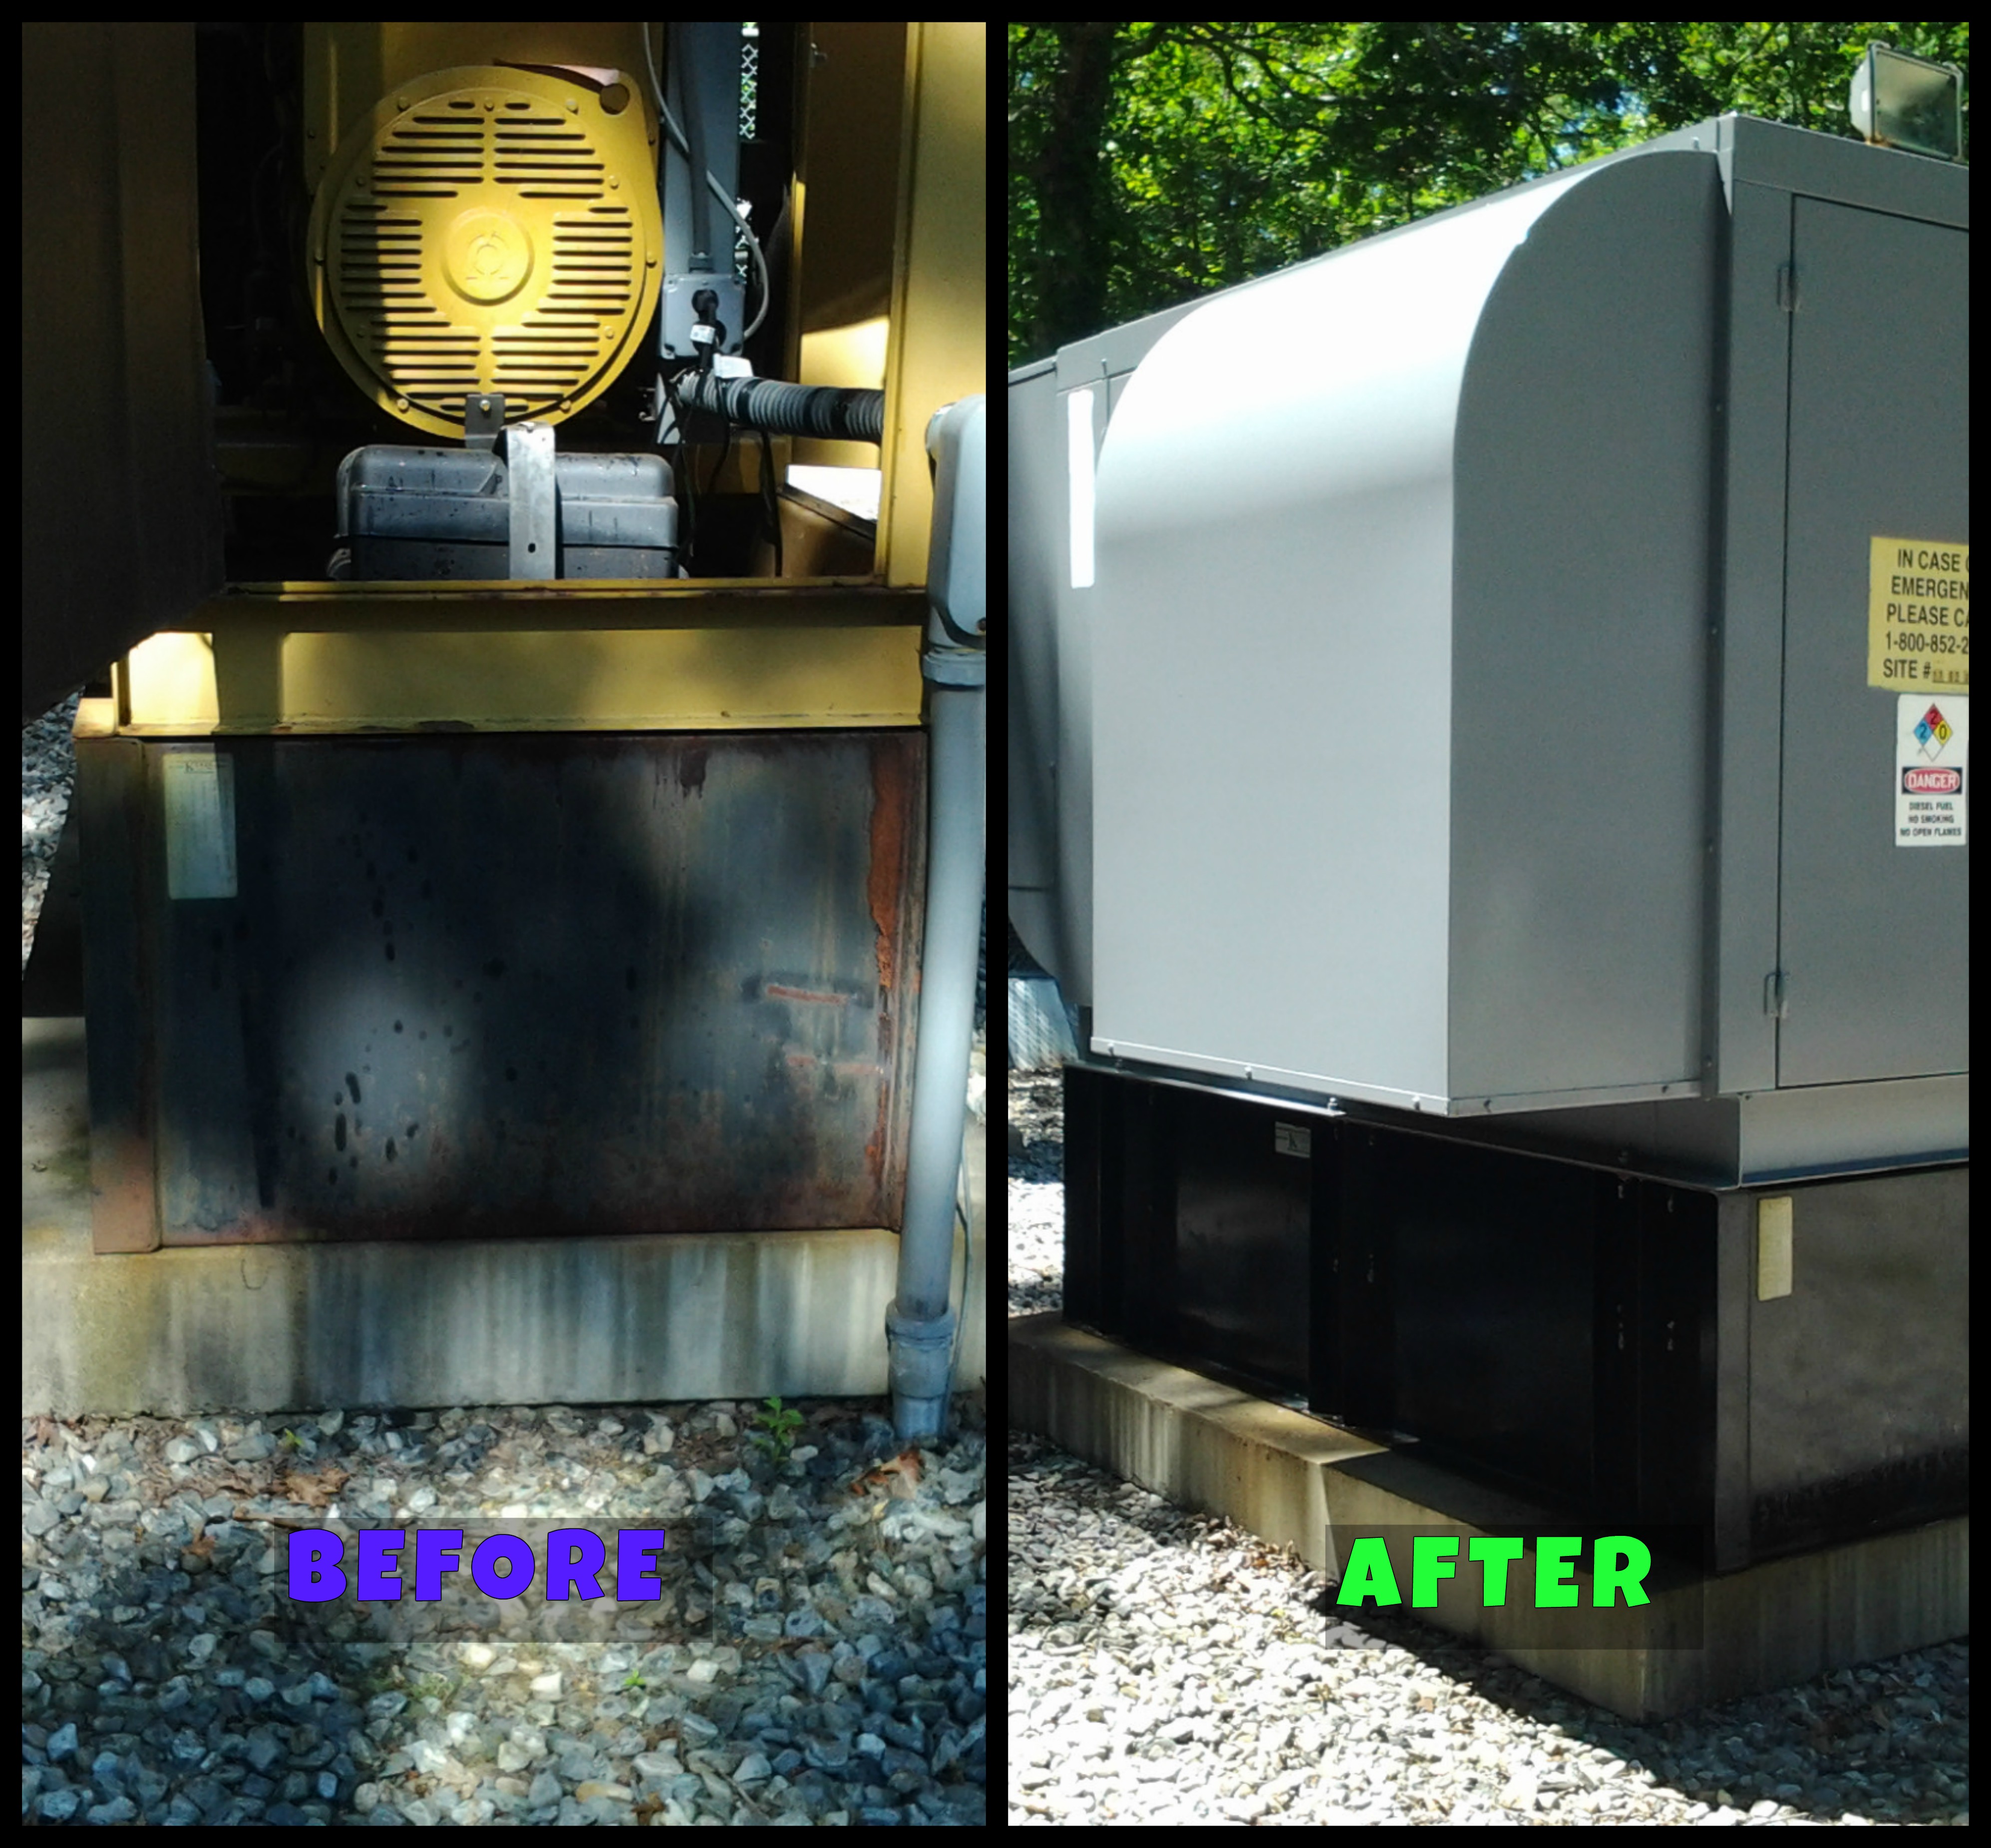 Restoring generators: No easy or routine task